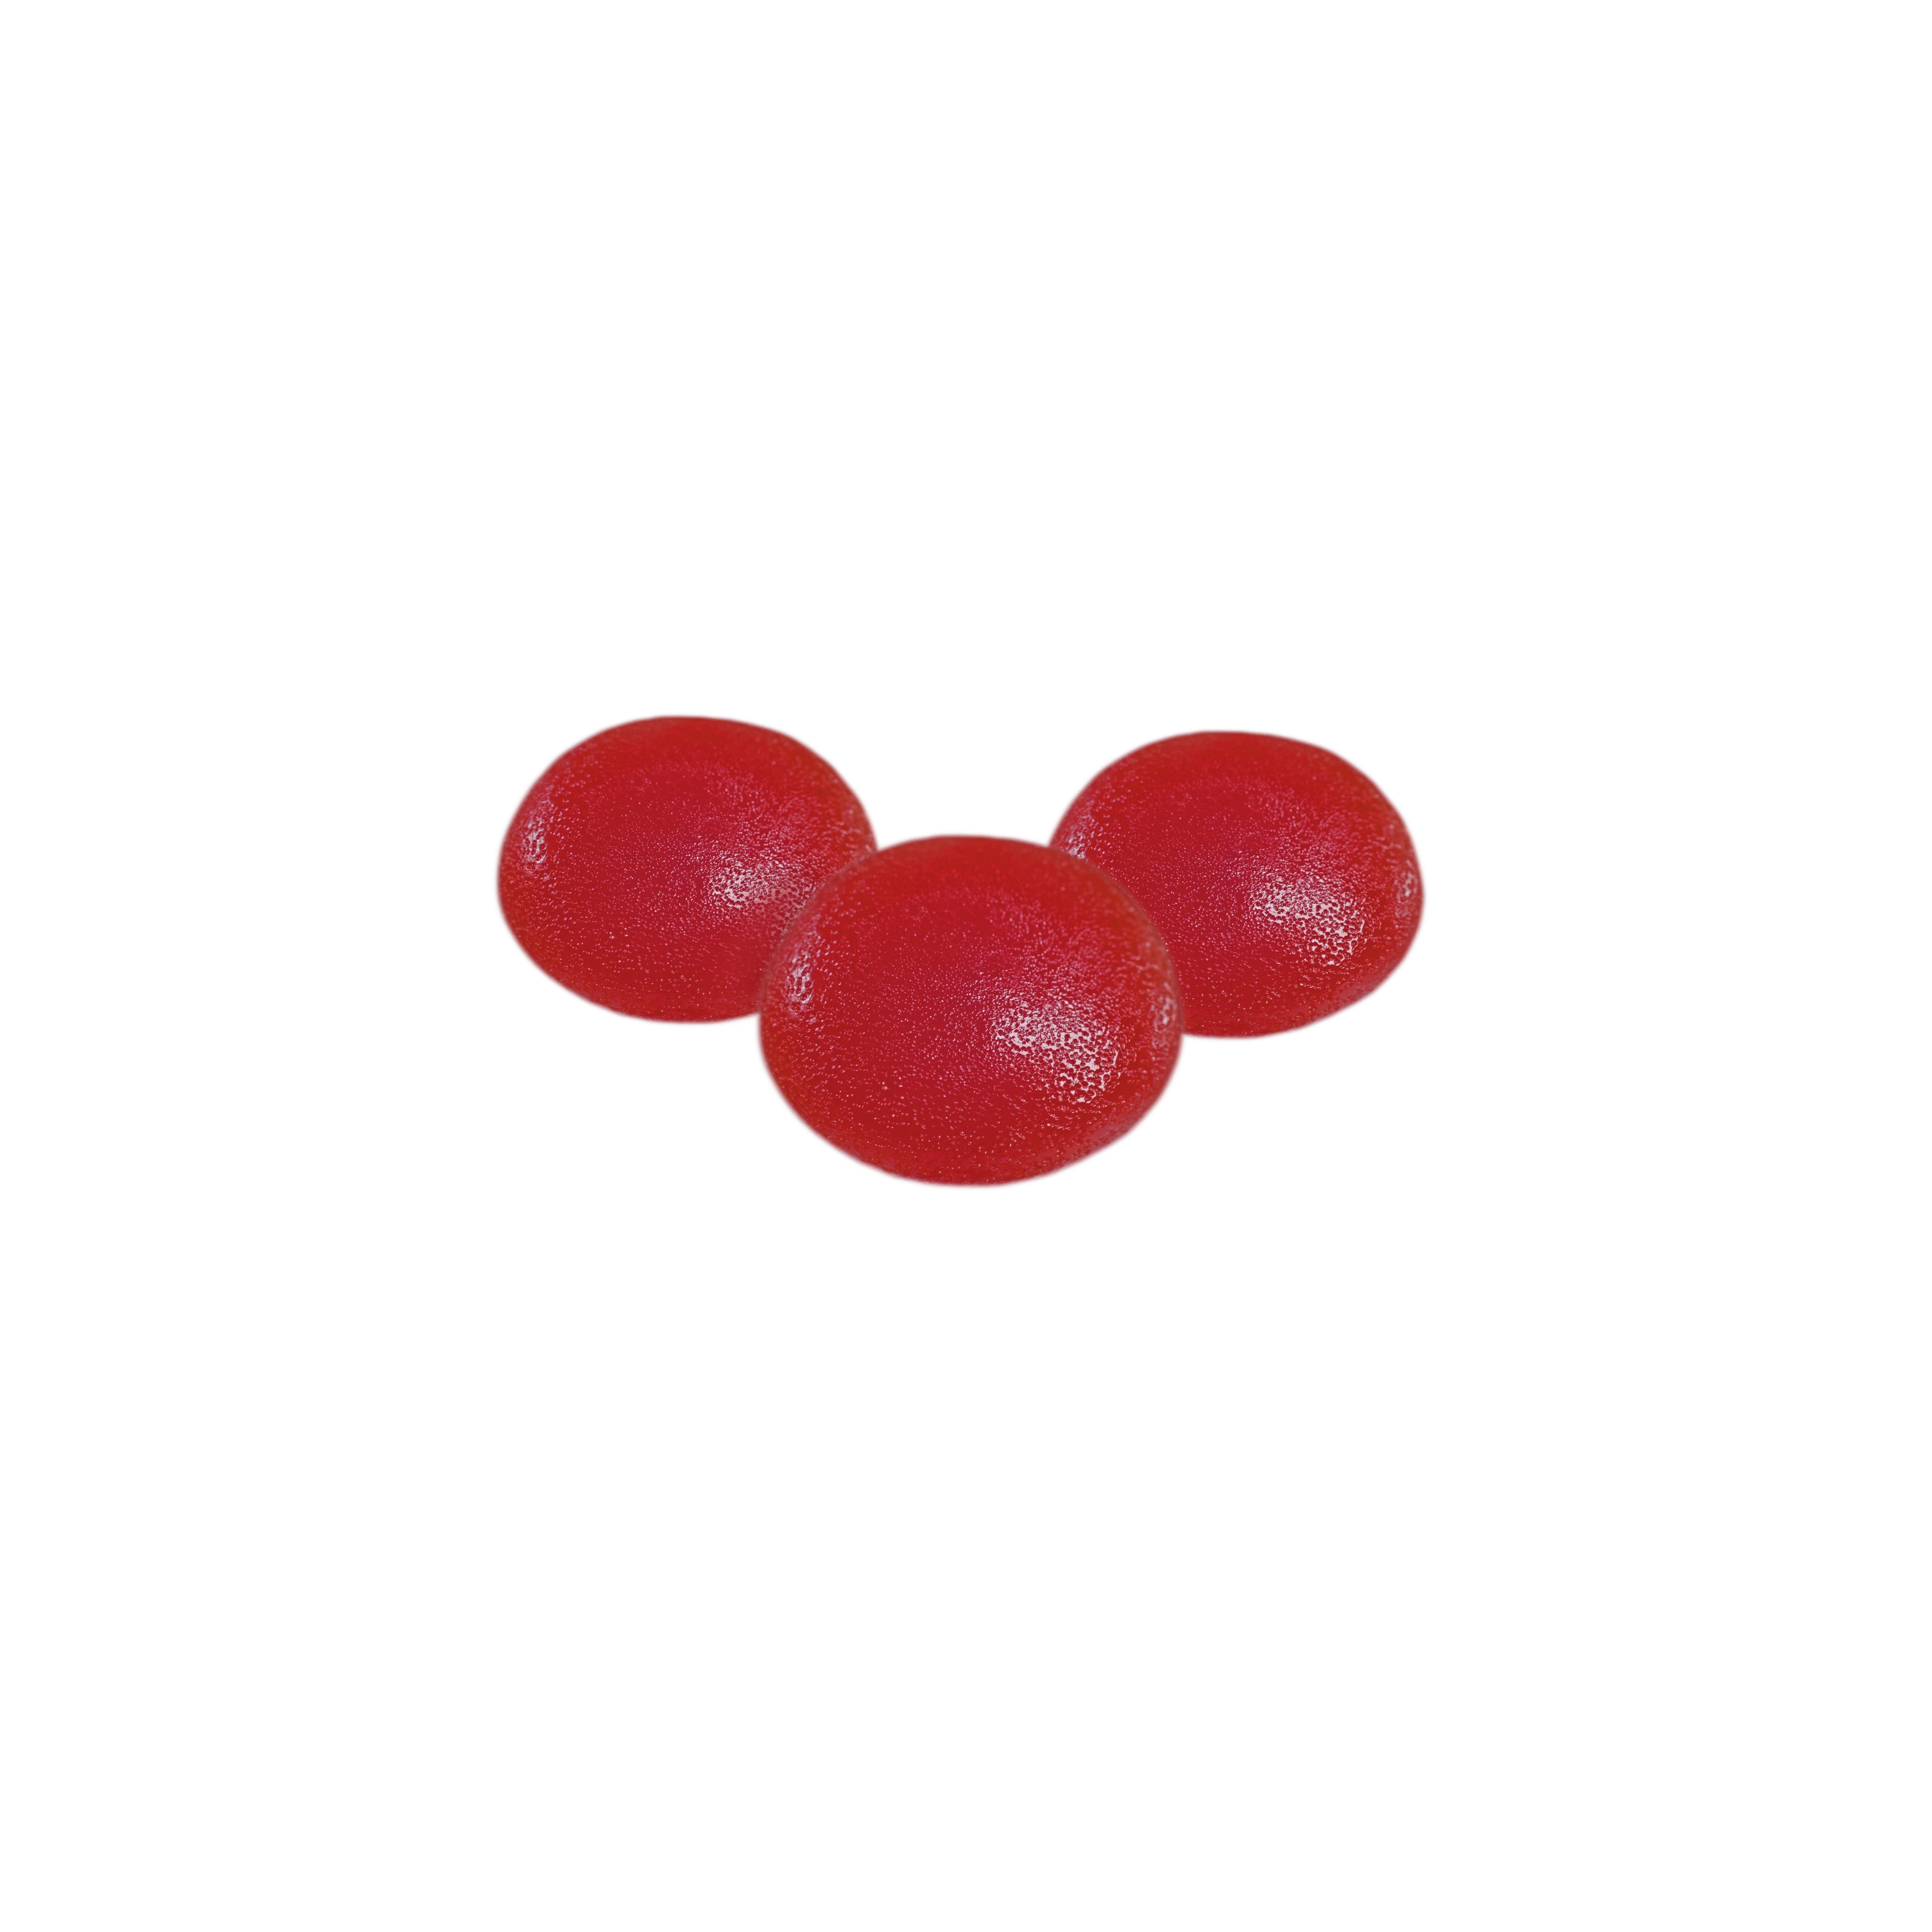 Fruit Drops (gummies) - Raspberry 4 Pack High Dose